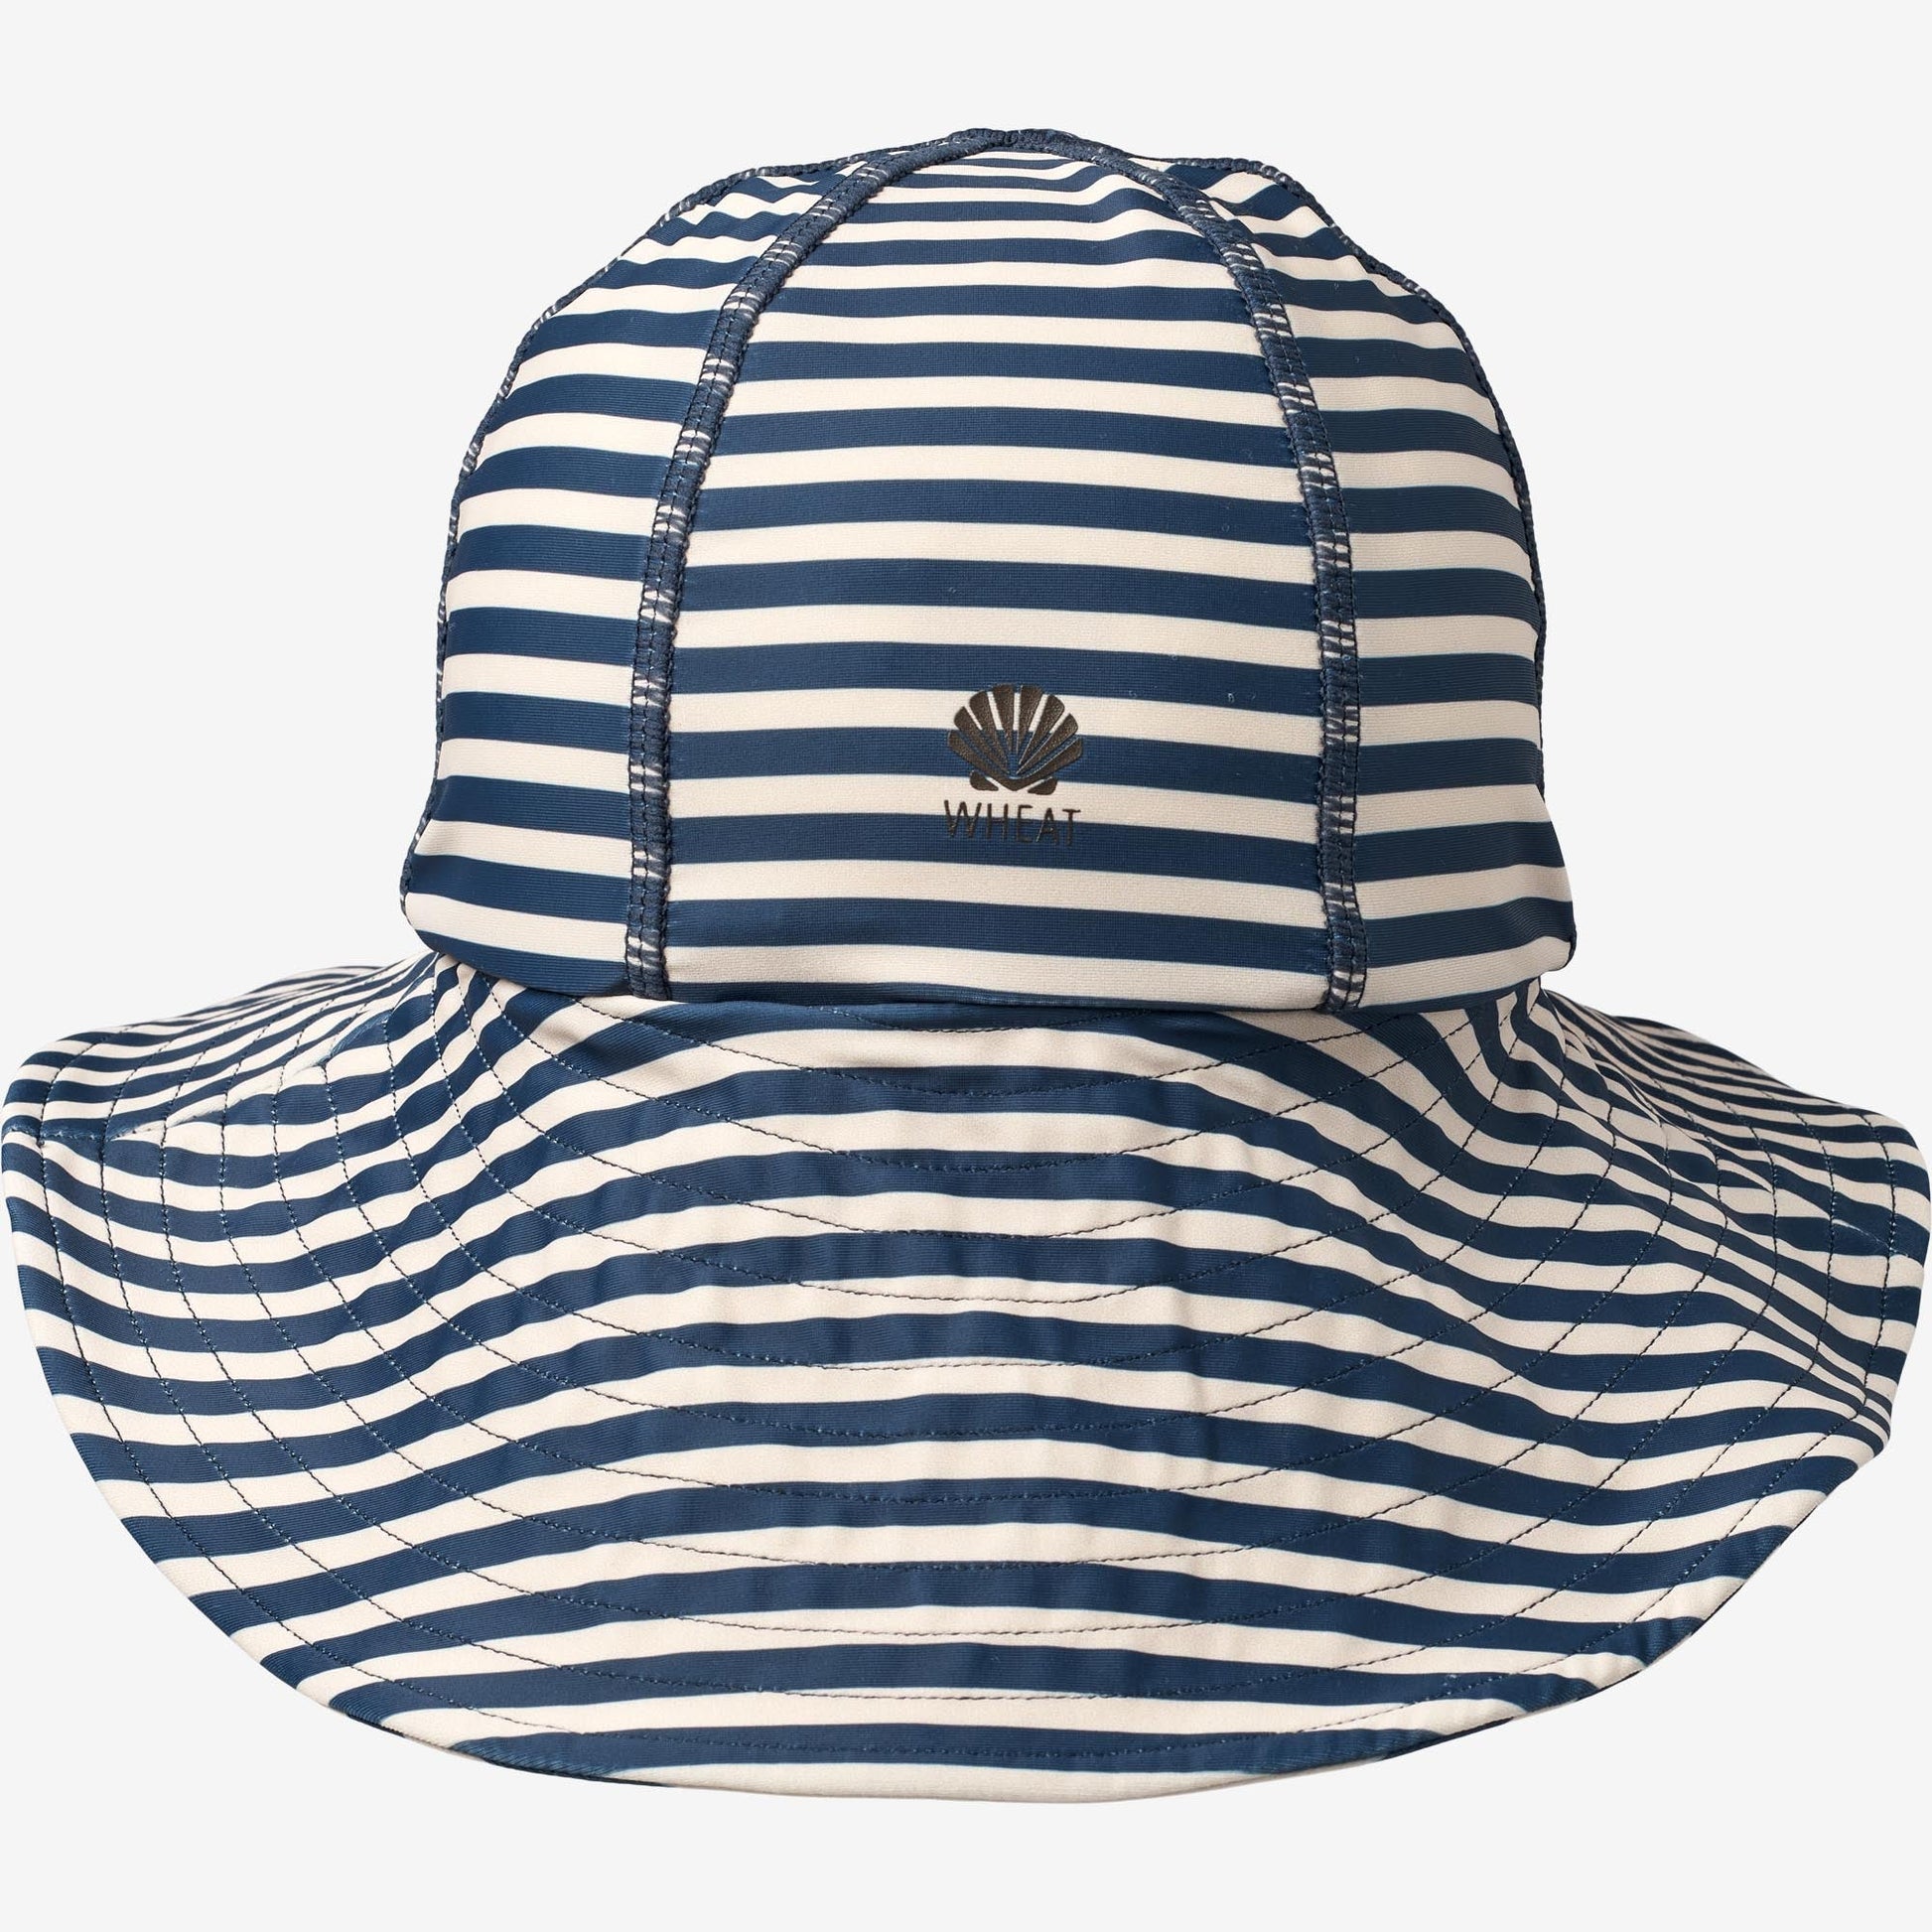 Wheat Children's UV Sun Hat - Indigo Stripe